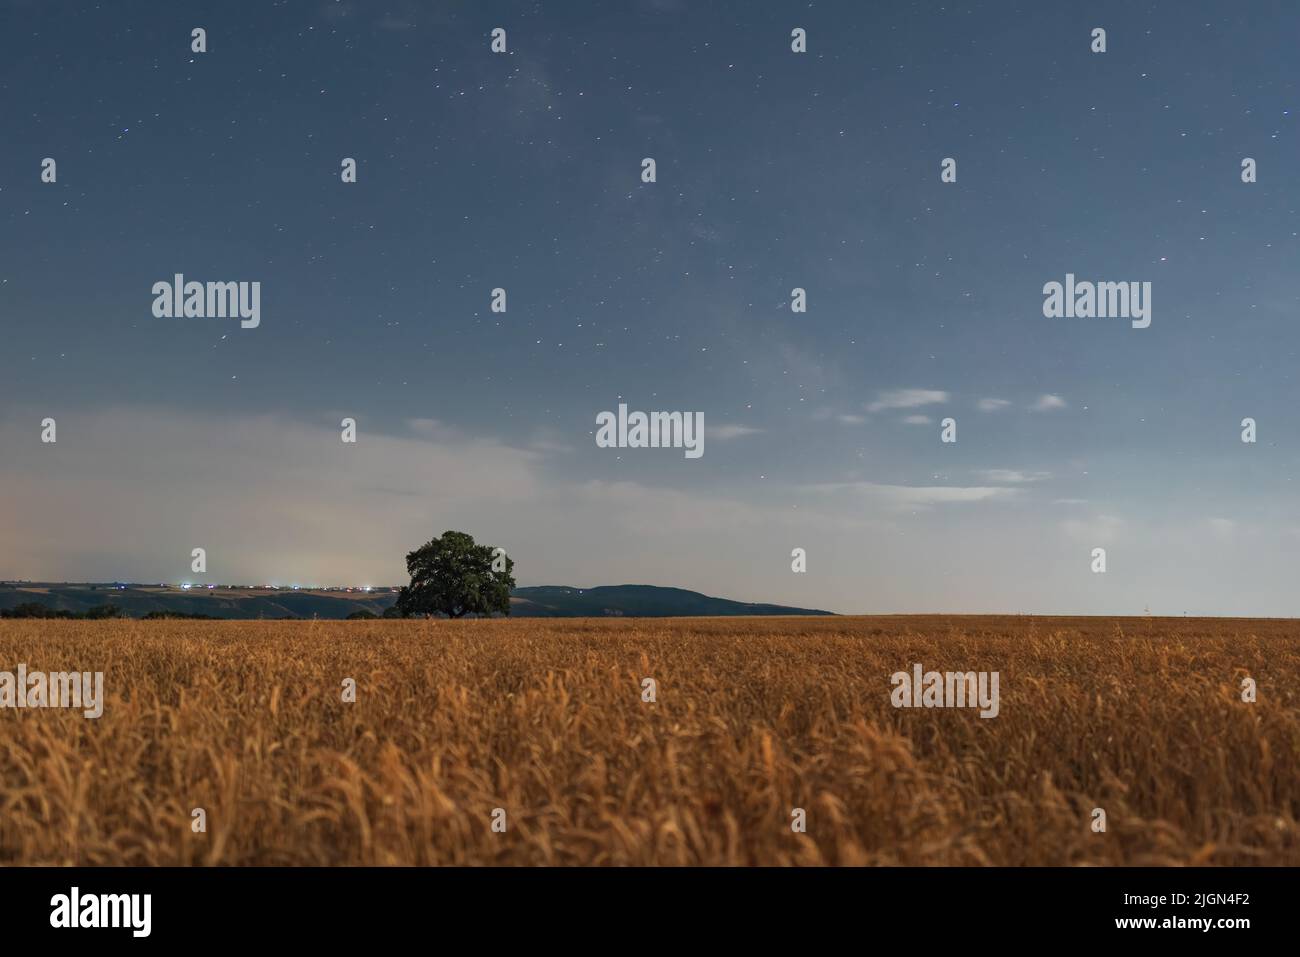 Old oak tree in a wheat field at night Stock Photo